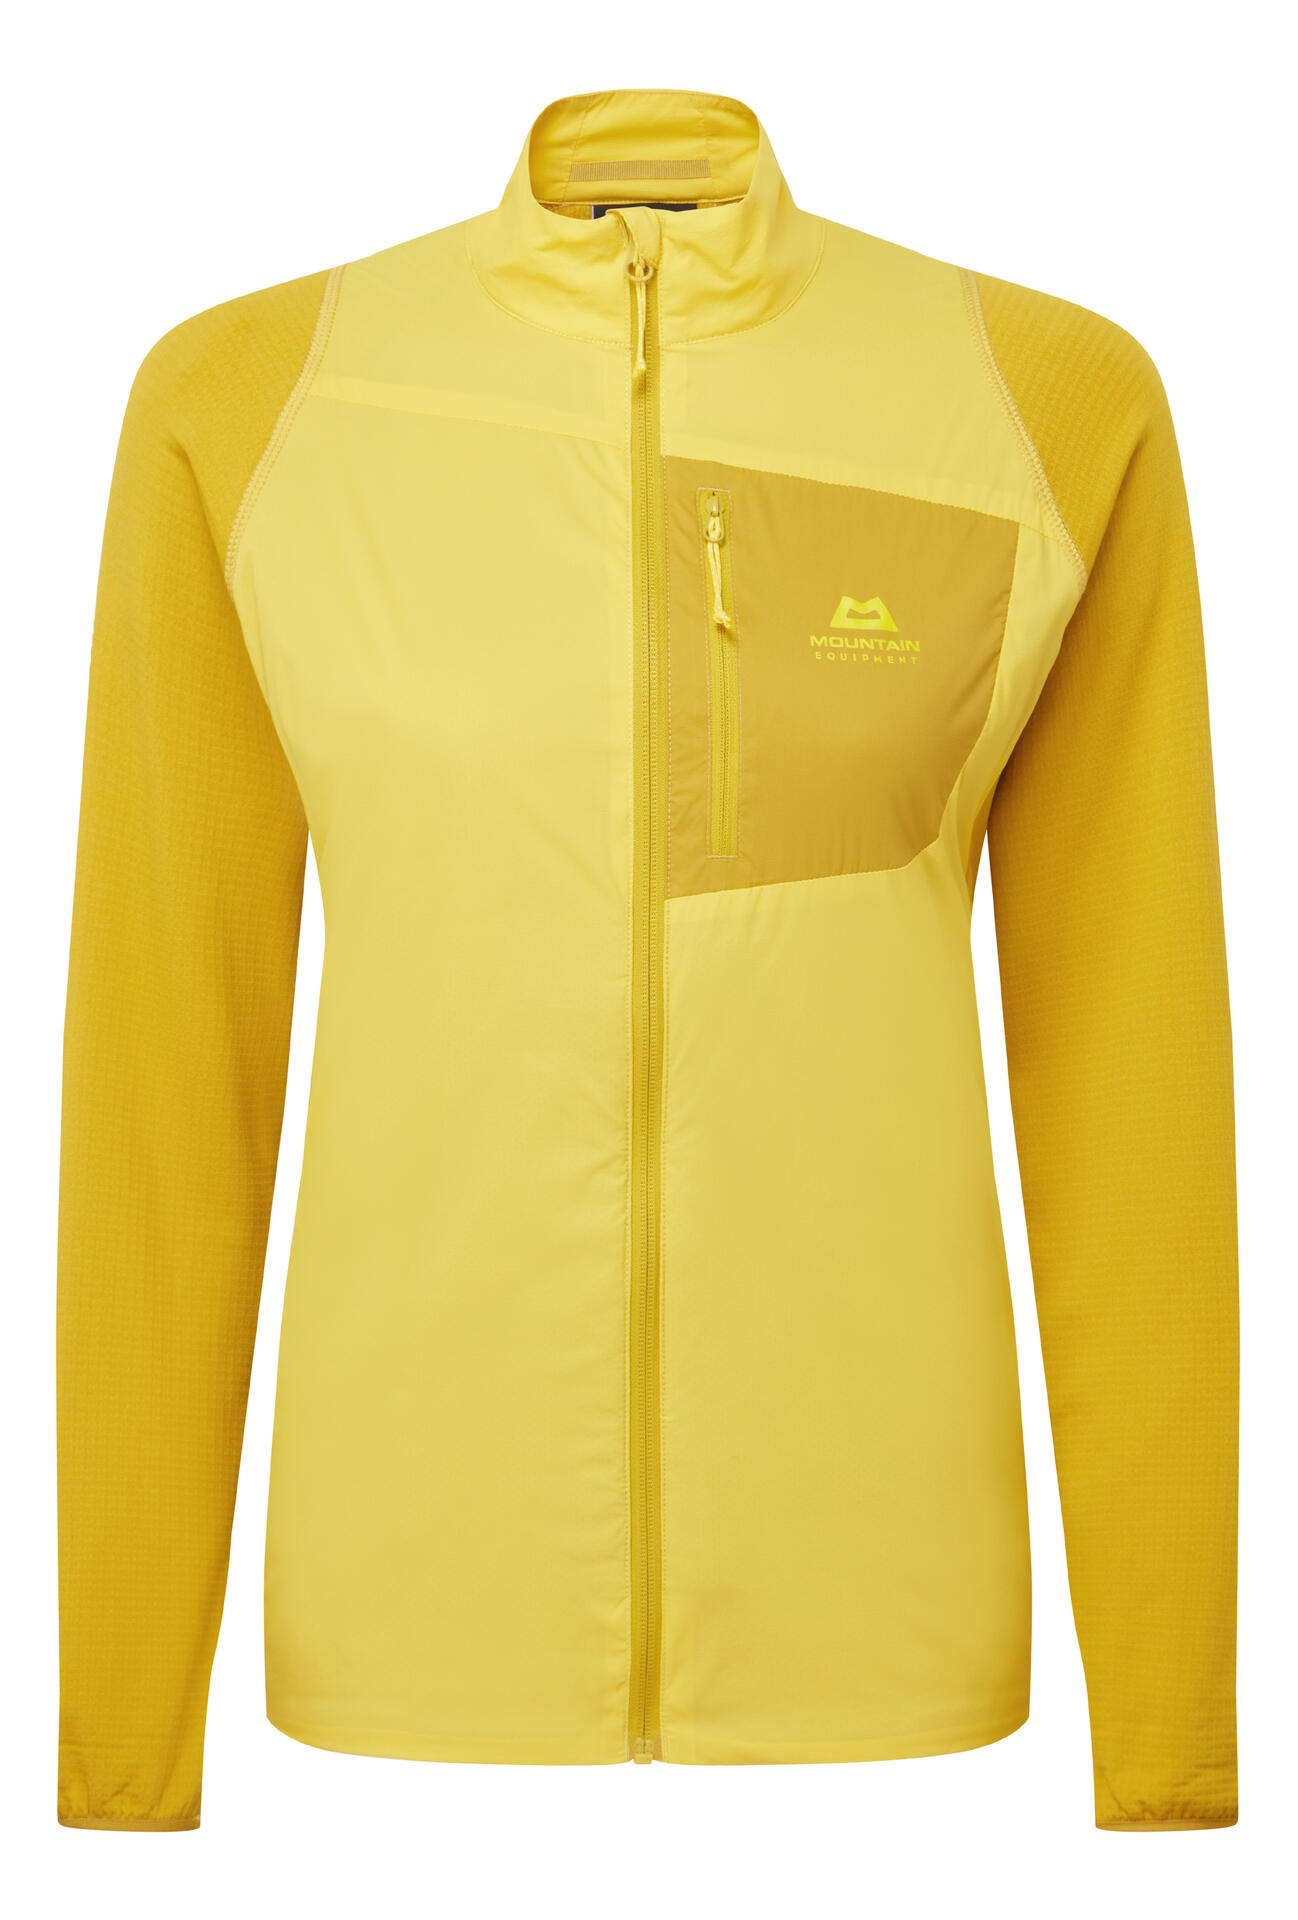 Mountain Equipment Switch Jacket Women'S Barva: Lemon/Acid, Velikost: XS